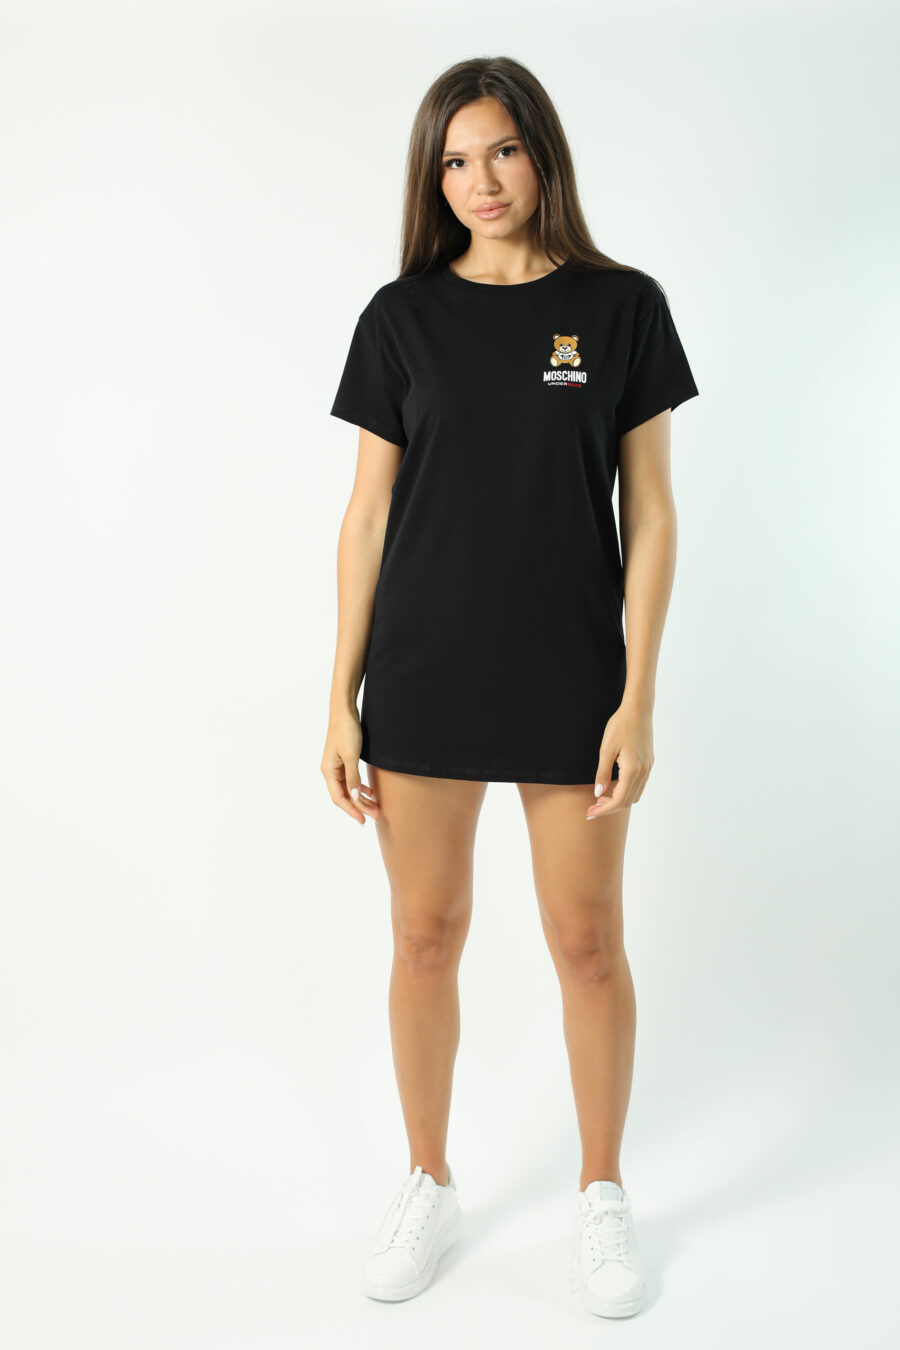 Schwarzes Maxi-T-Shirt mit Mini-Logo-Bär unterm Arm - Fotos 2802